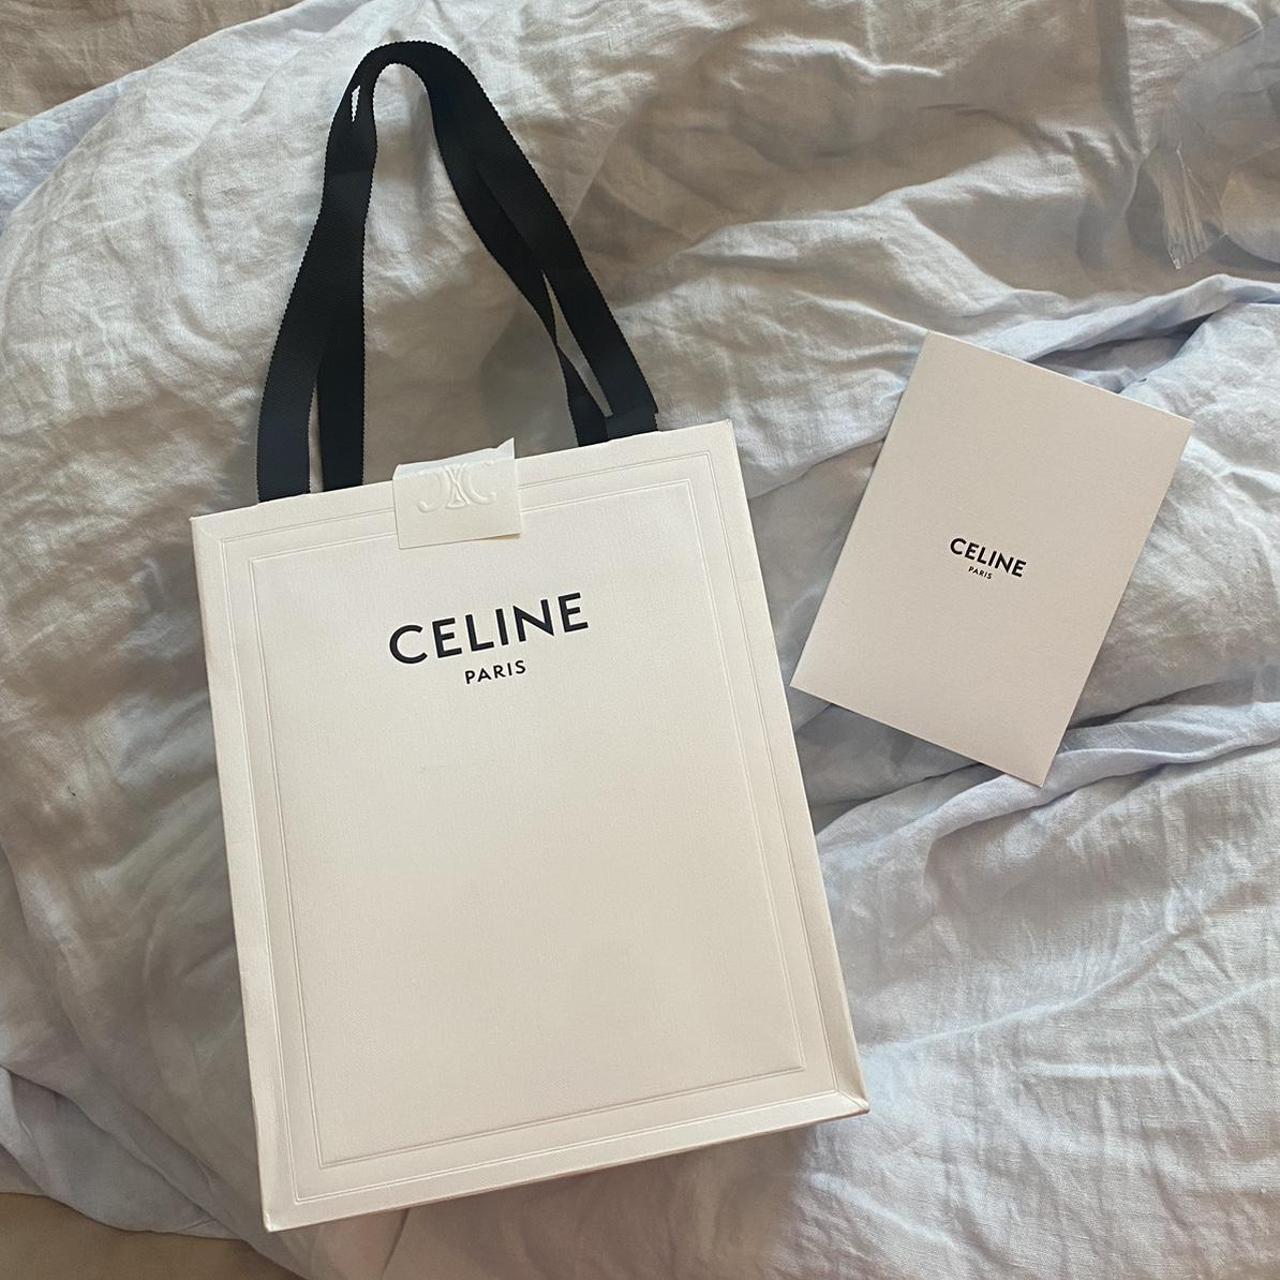 Celine Women's Tote Bags